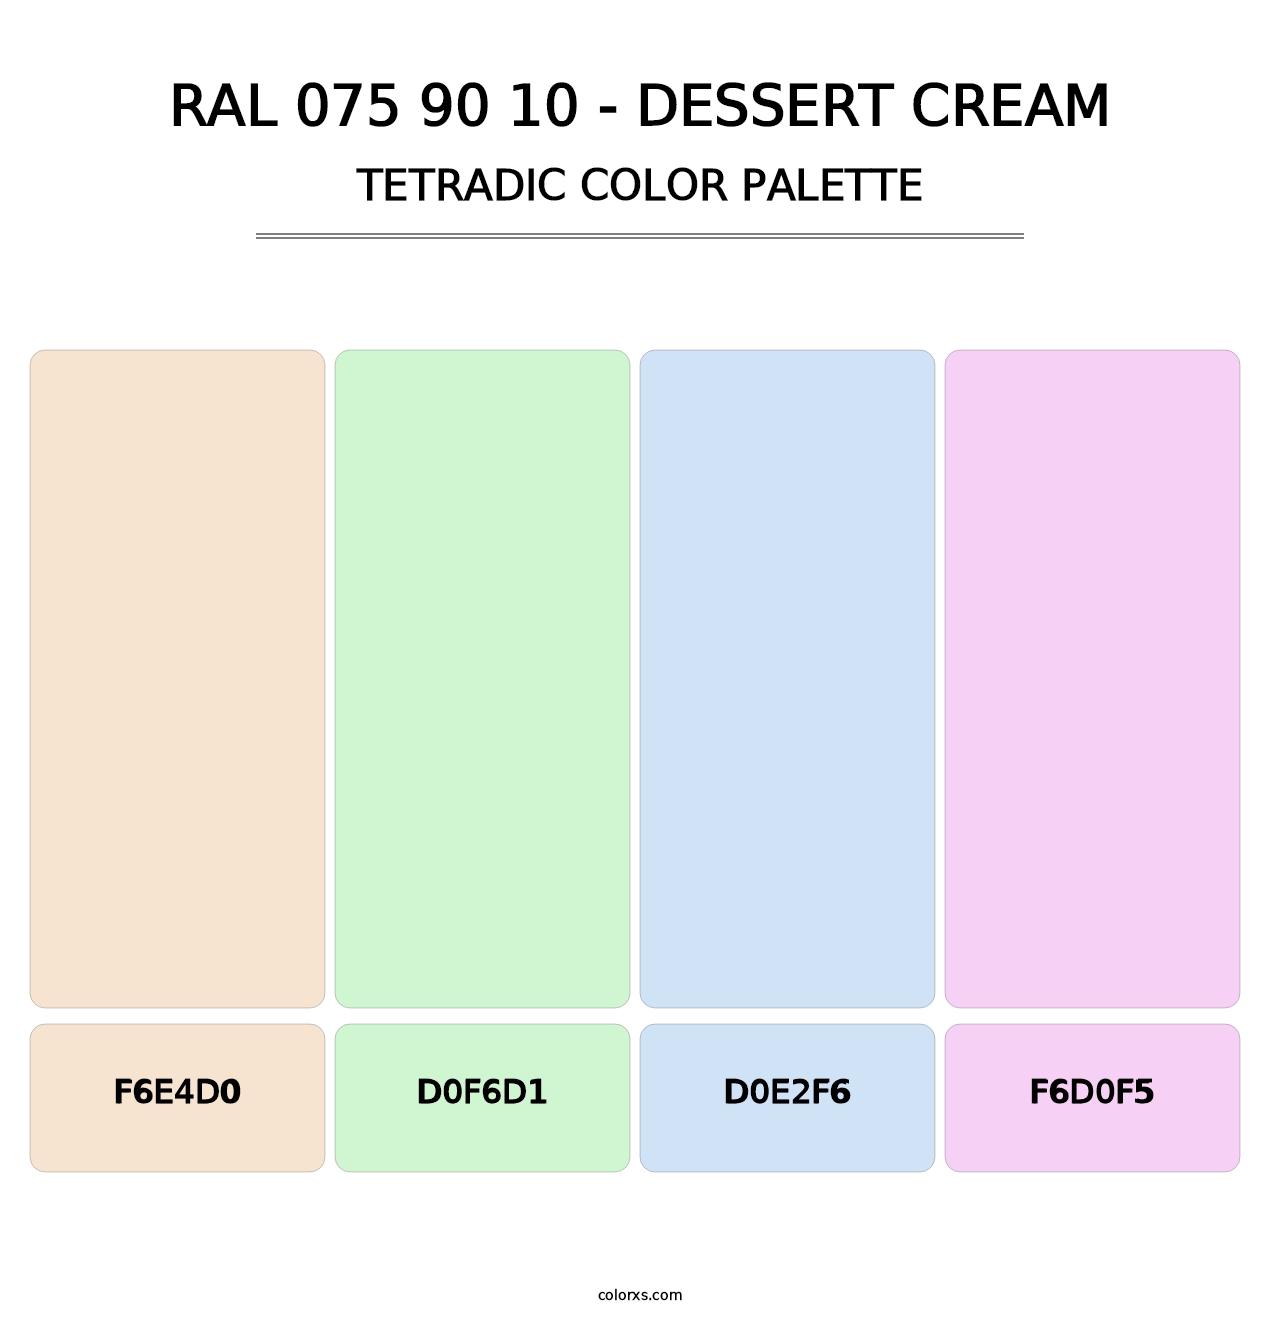 RAL 075 90 10 - Dessert Cream - Tetradic Color Palette